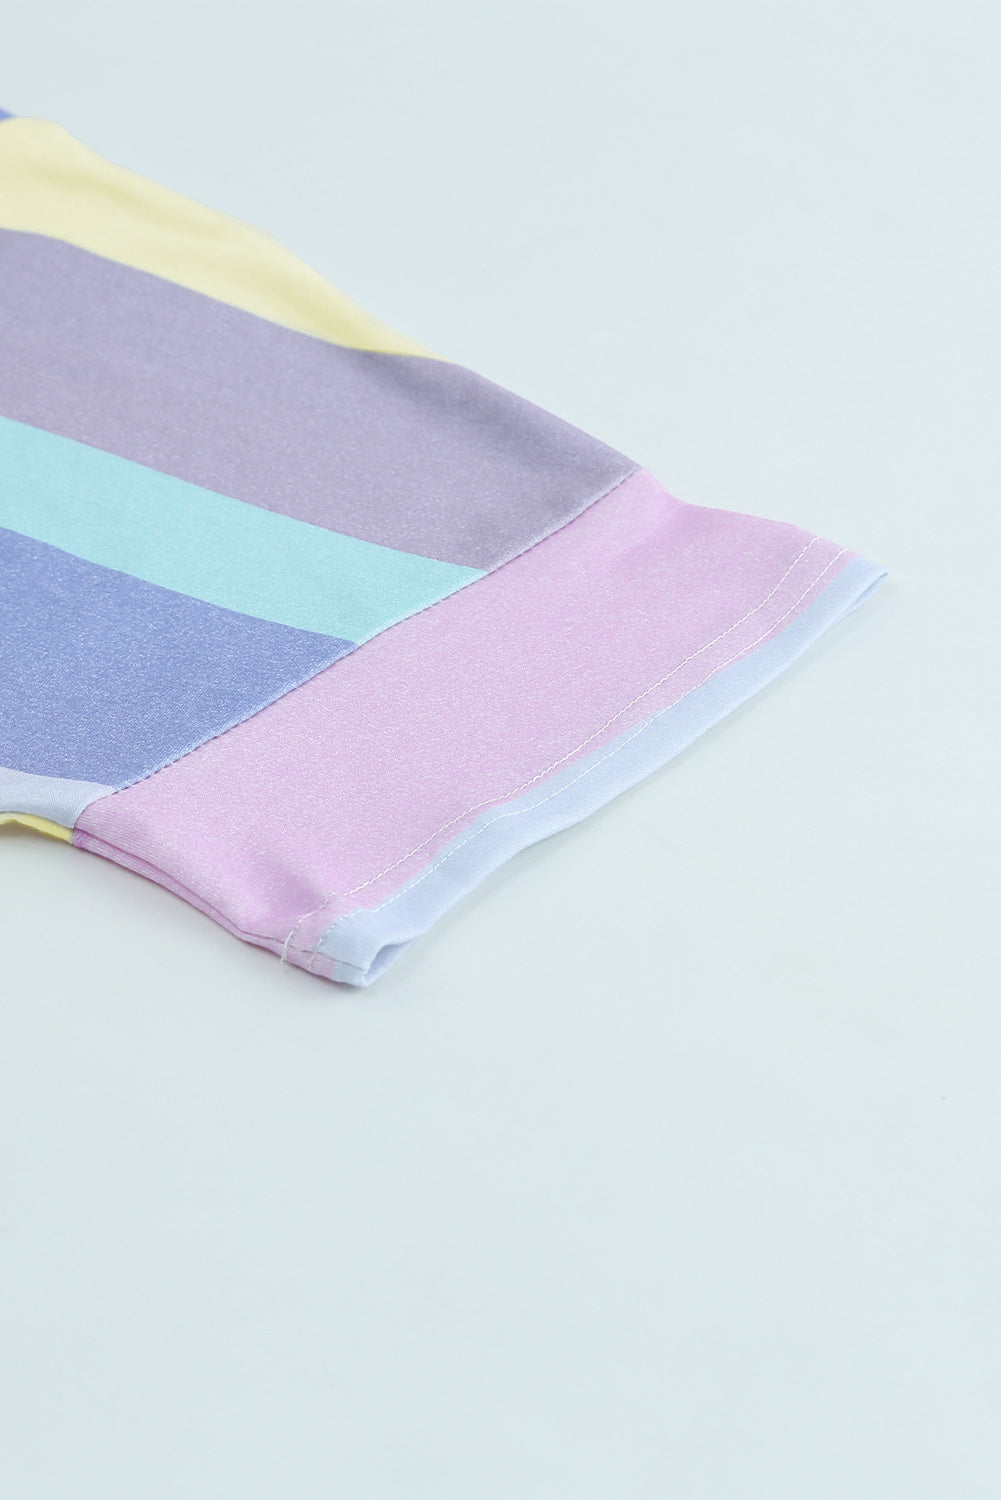 Rainbow Stripe Tie-Front Tee Shirt